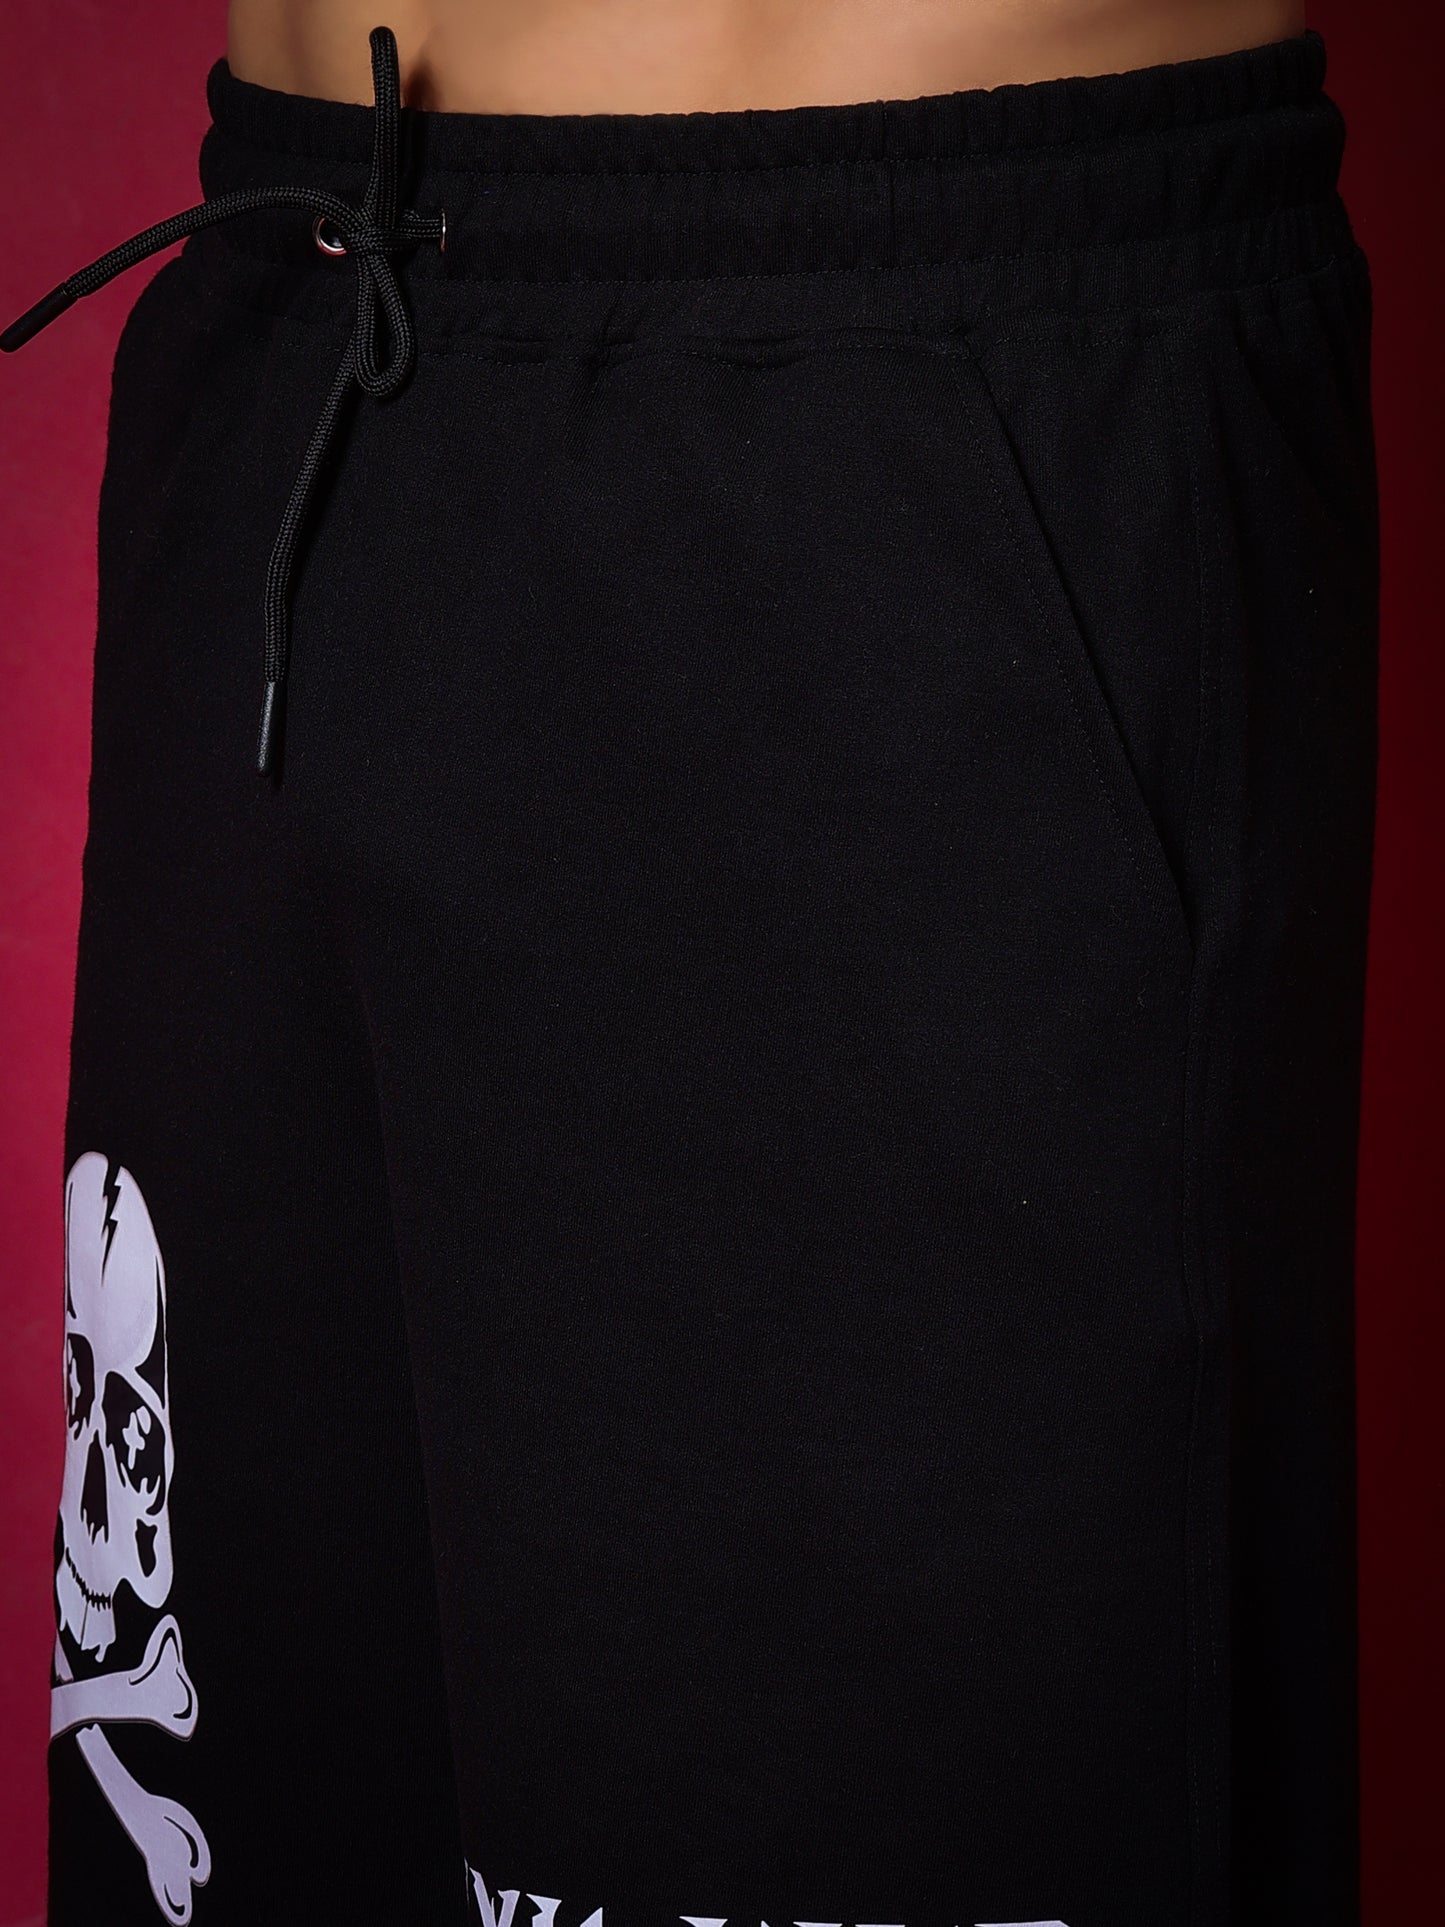 Jym King Regular Fit Shorts (Black)